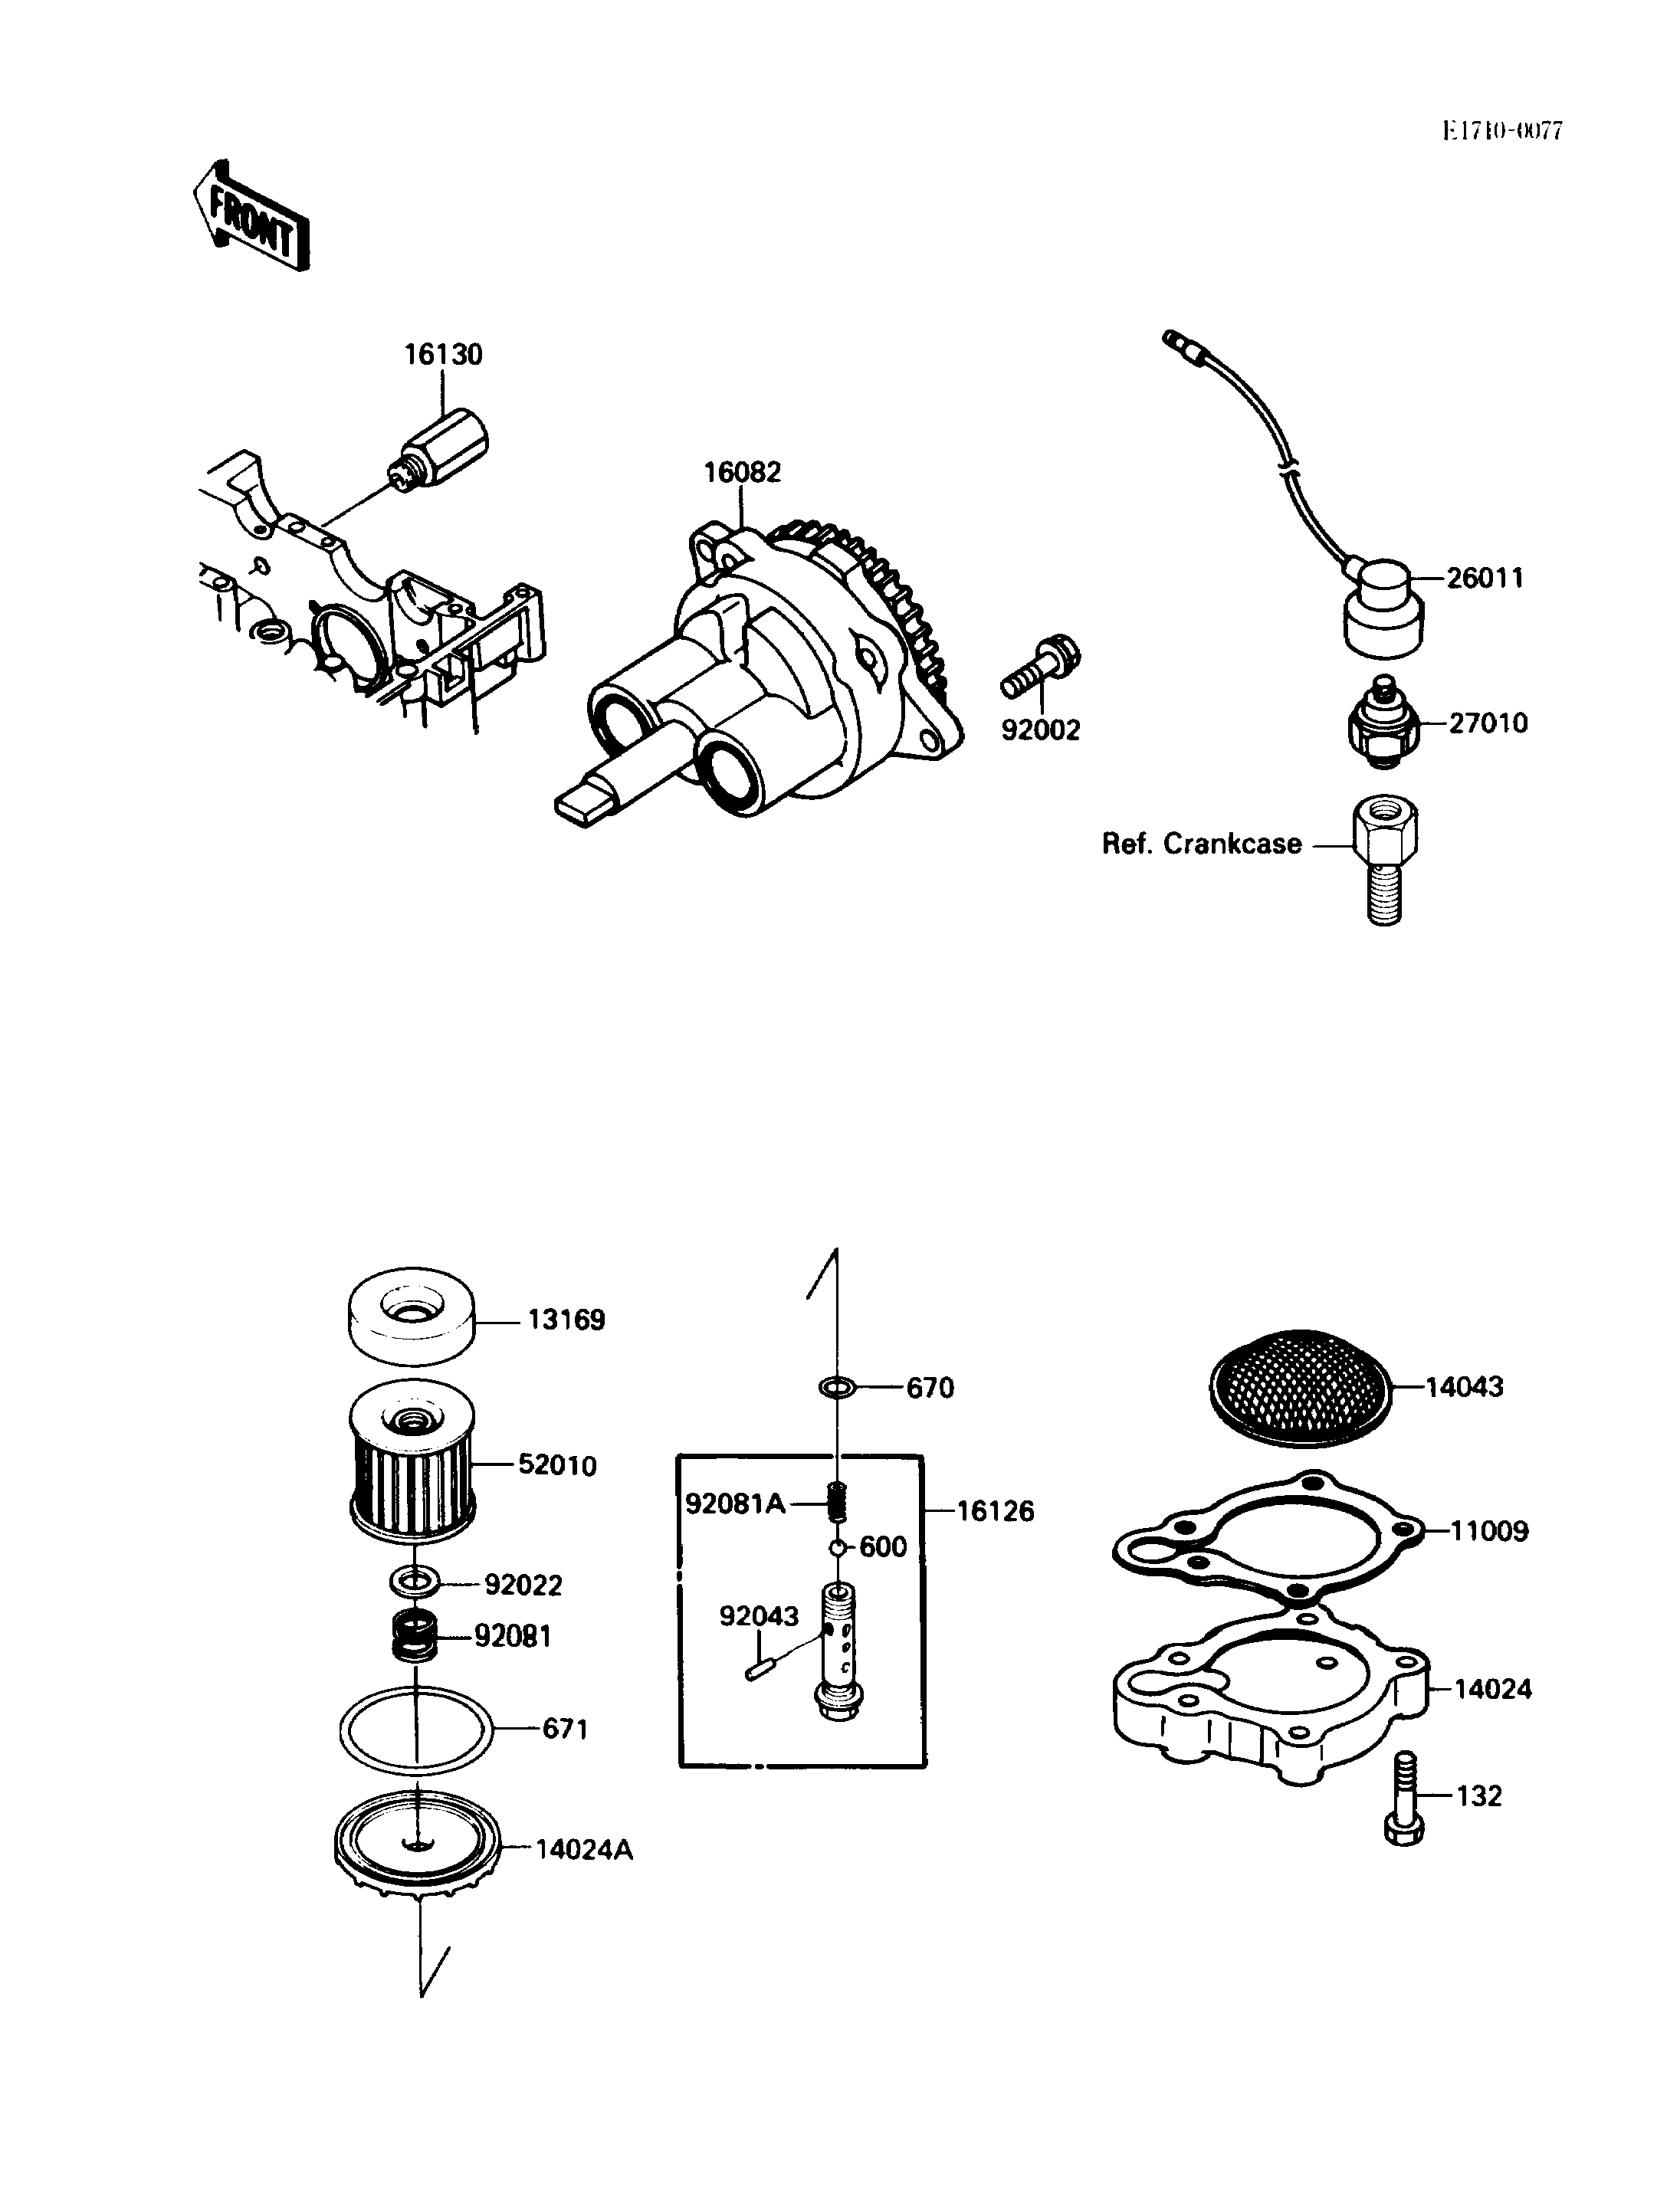 Oil Pump/Oil Filter